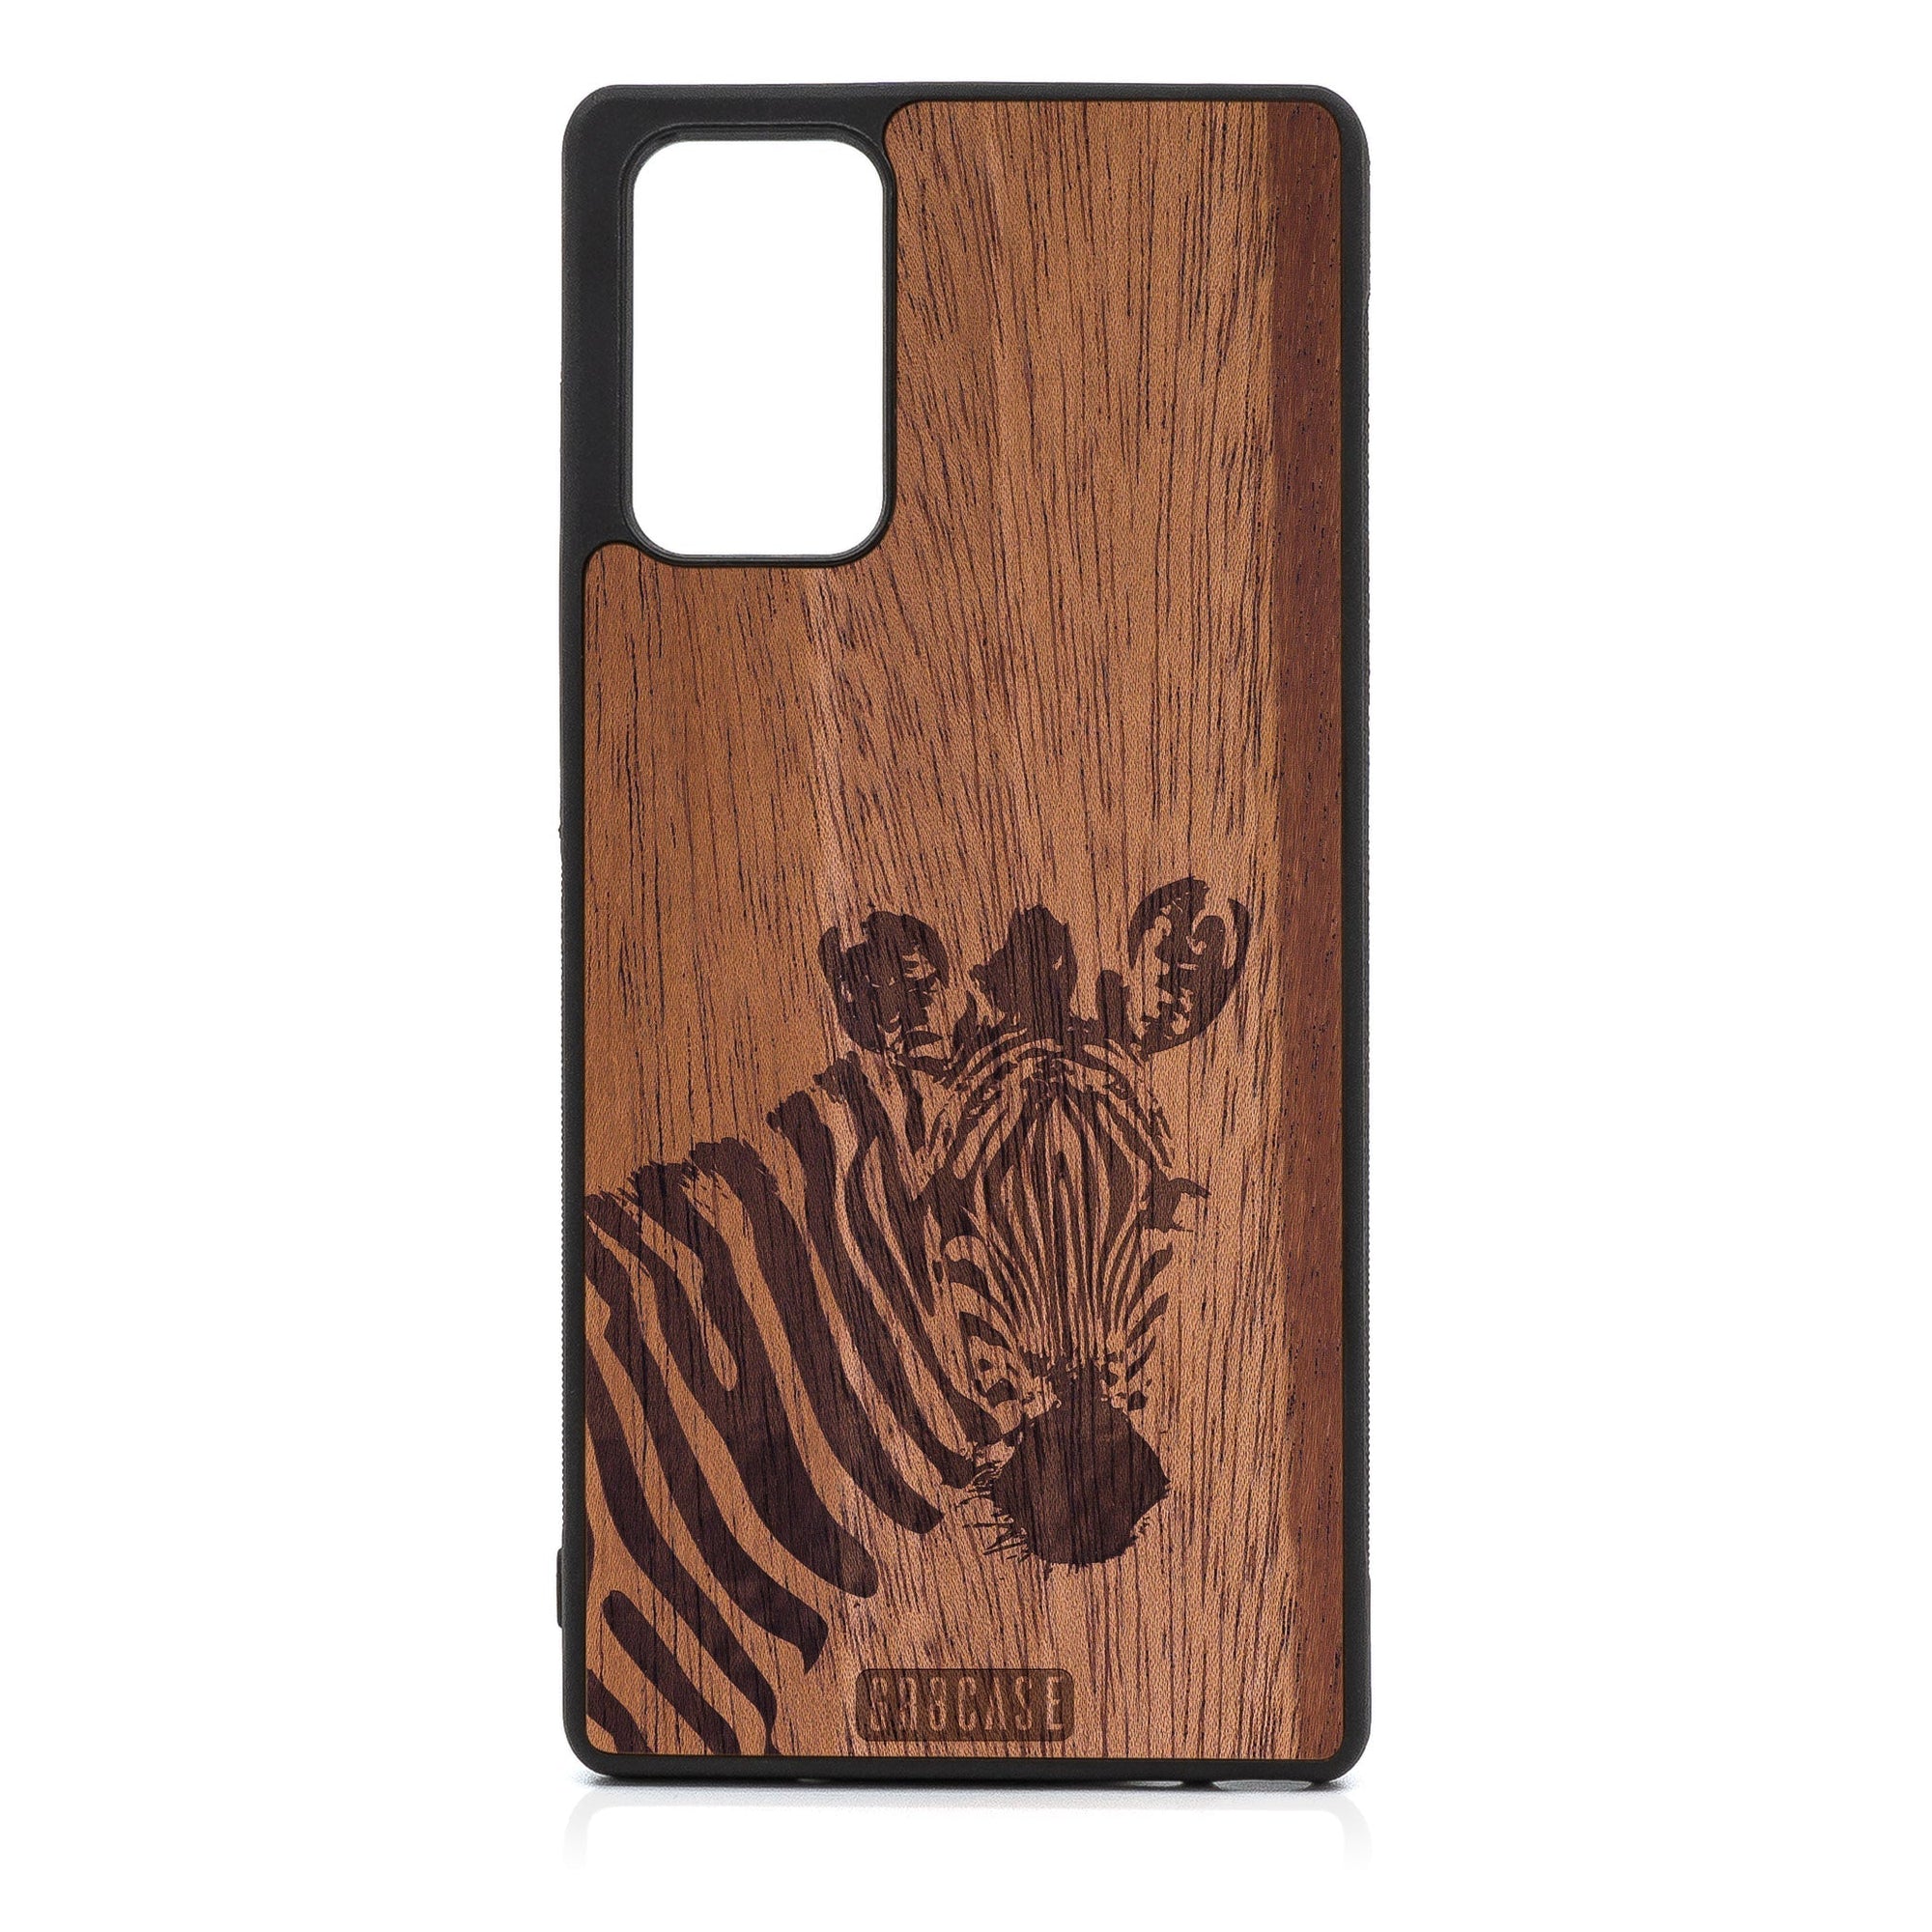 Lookout Zebra Design Wood Case For Samsung Galaxy A71 5G